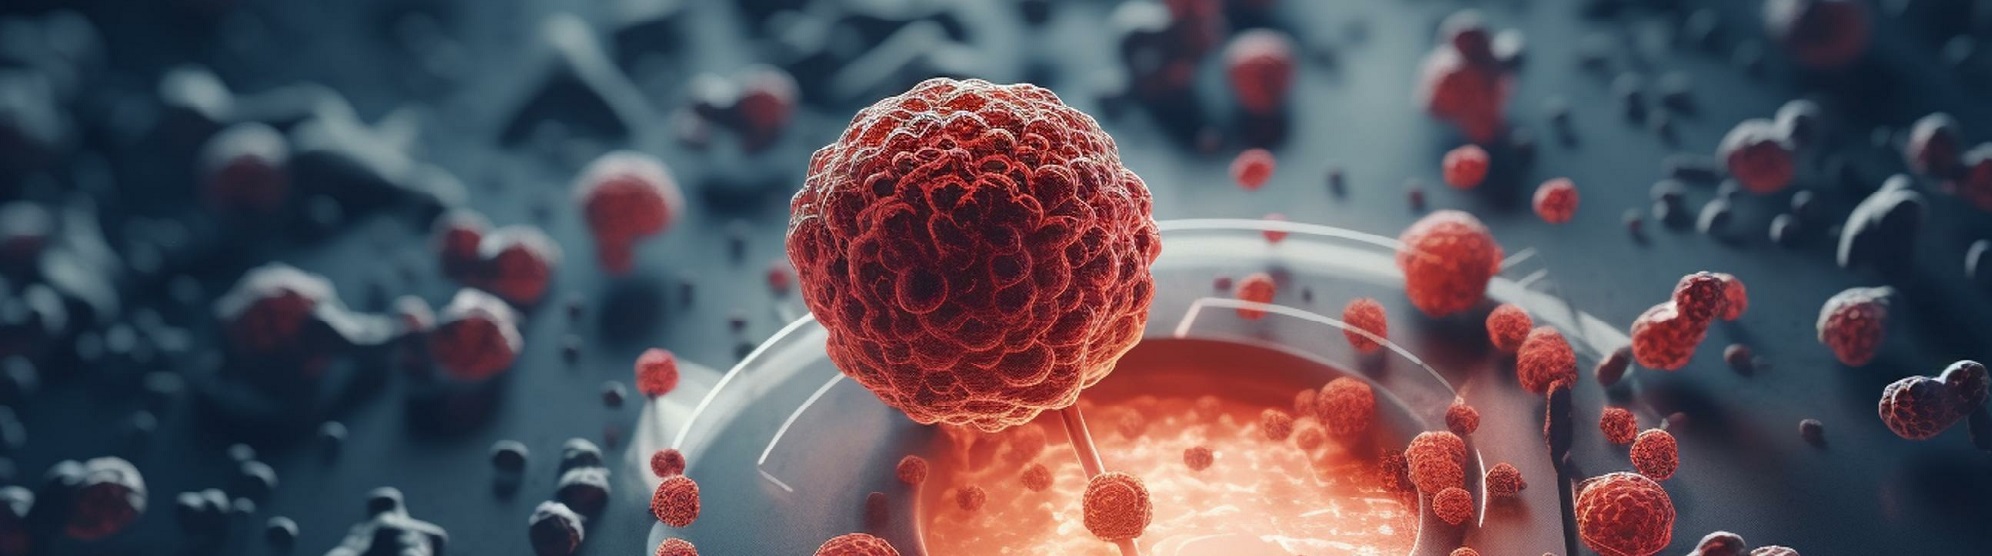 röda cancerceller på mörk bakgrund